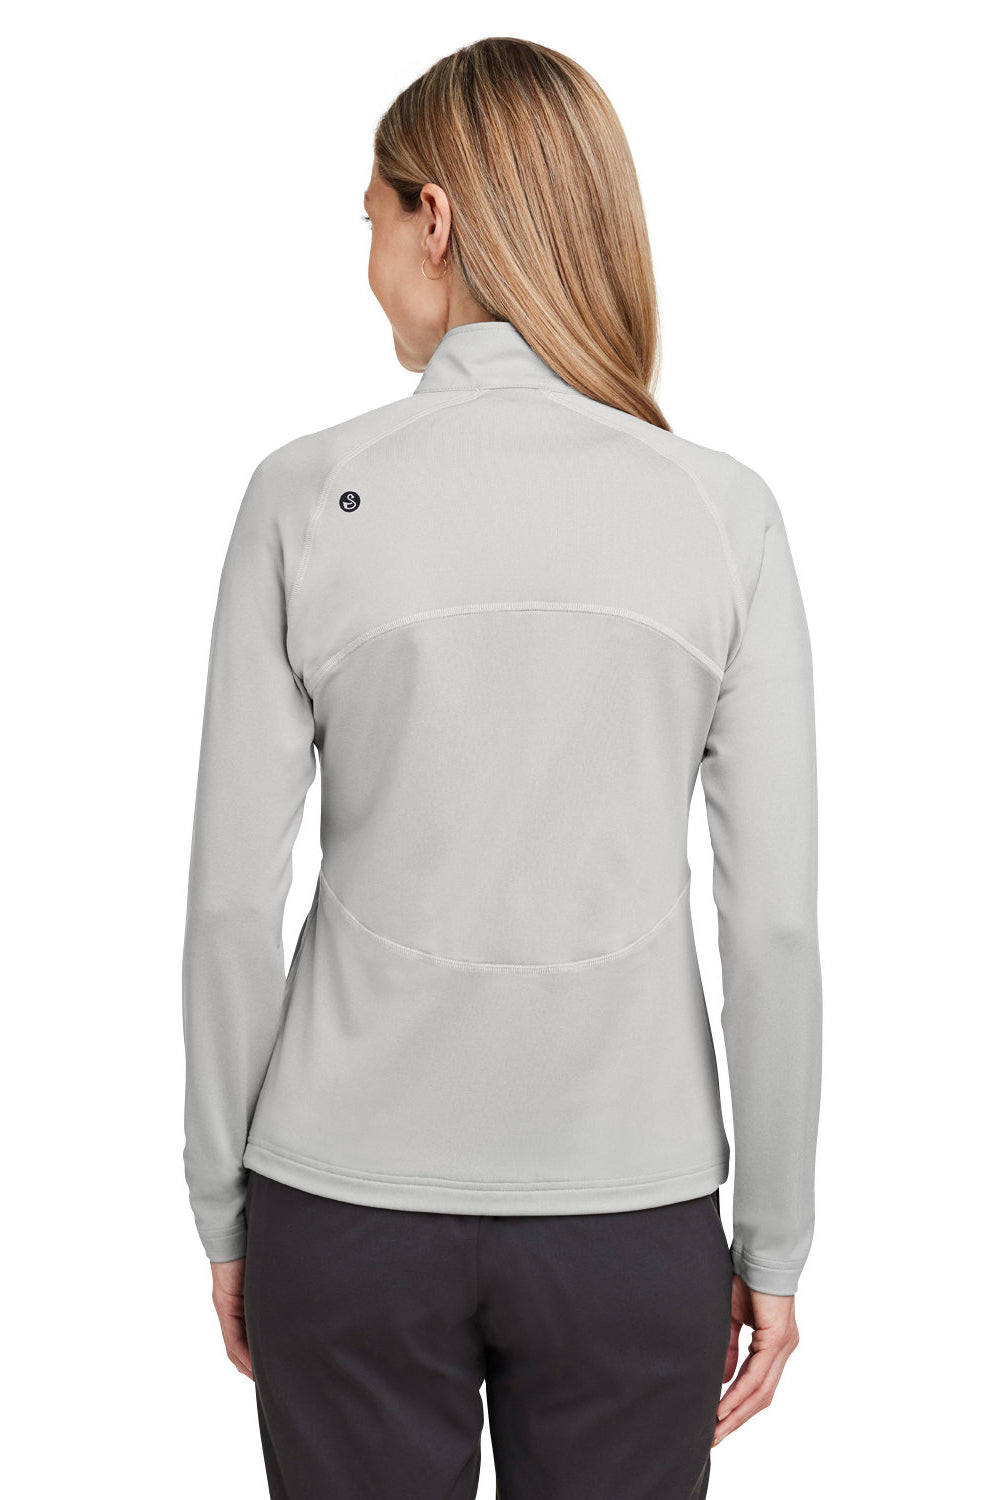 Swannies Golf SWF400L Womens Cora Full Zip Jacket Glacier Grey Back